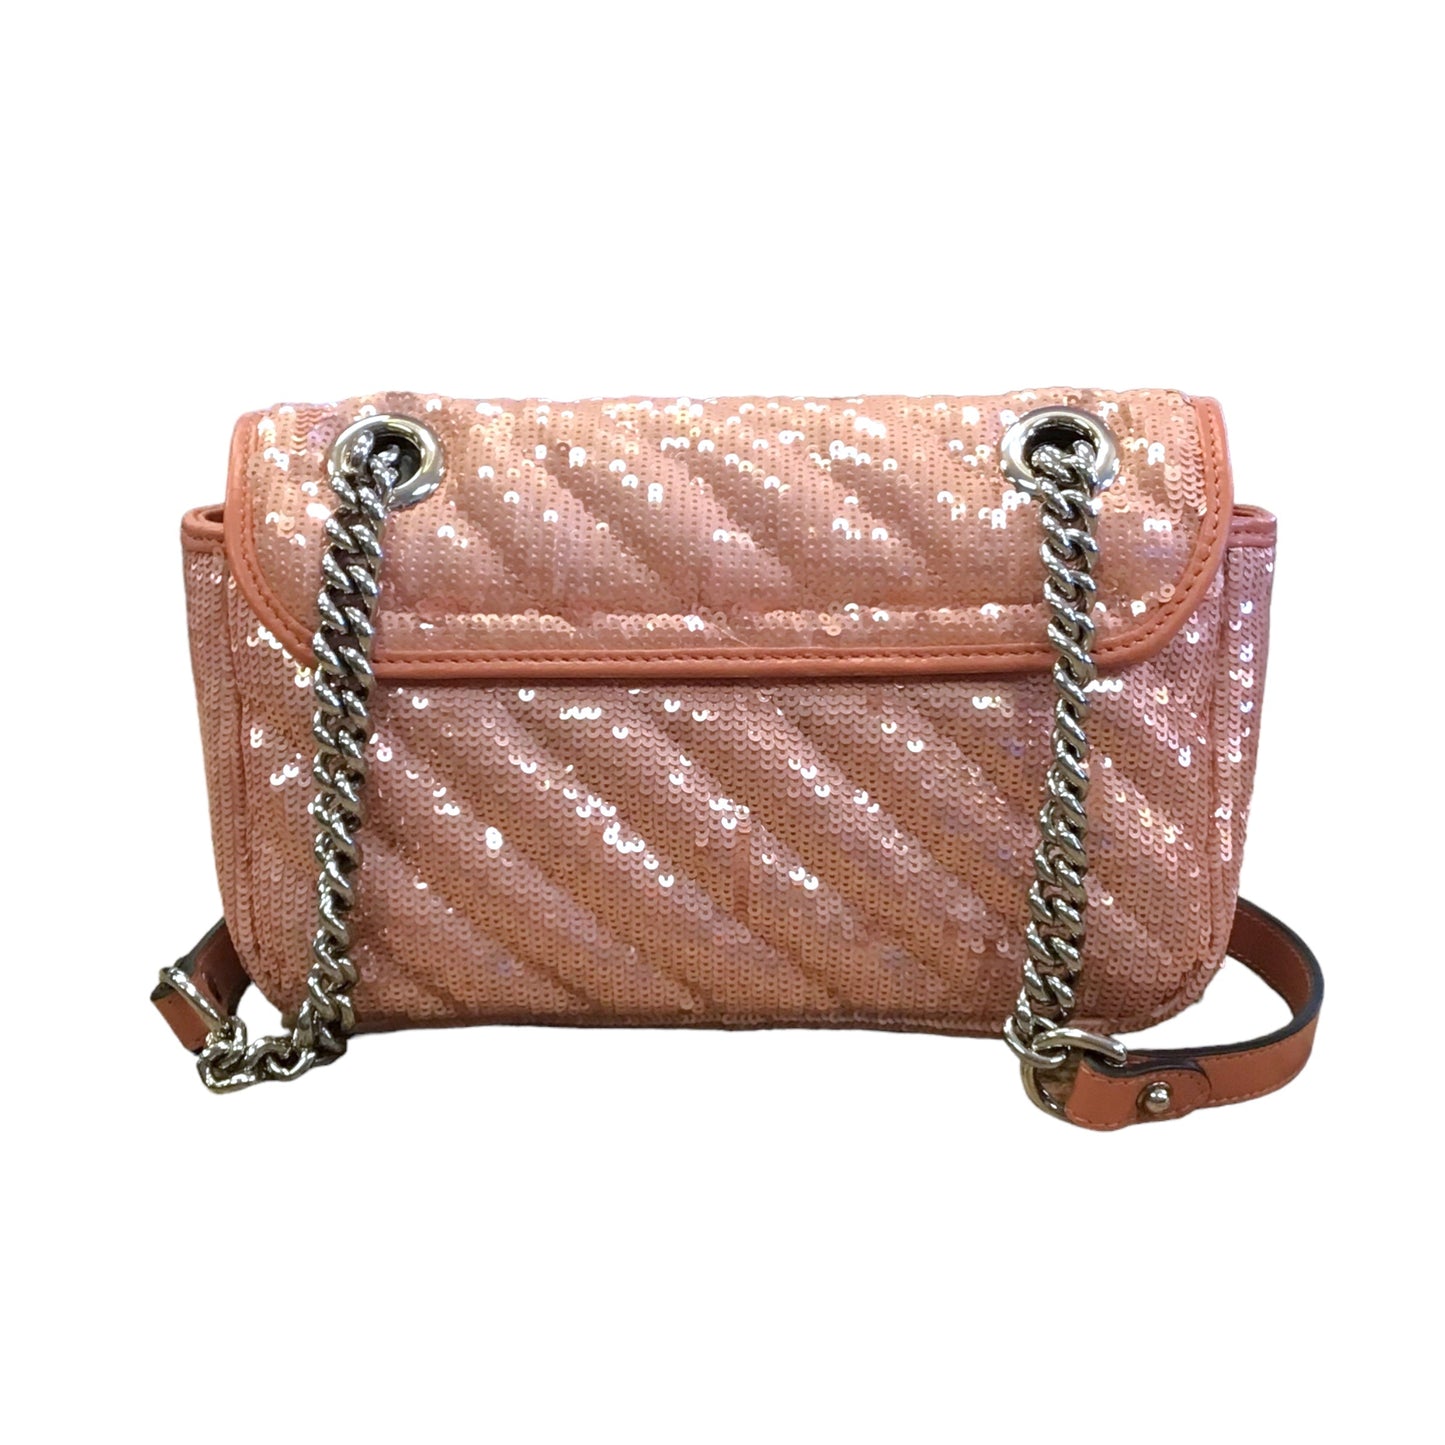 Handbag Designer By Gucci  Size: Small